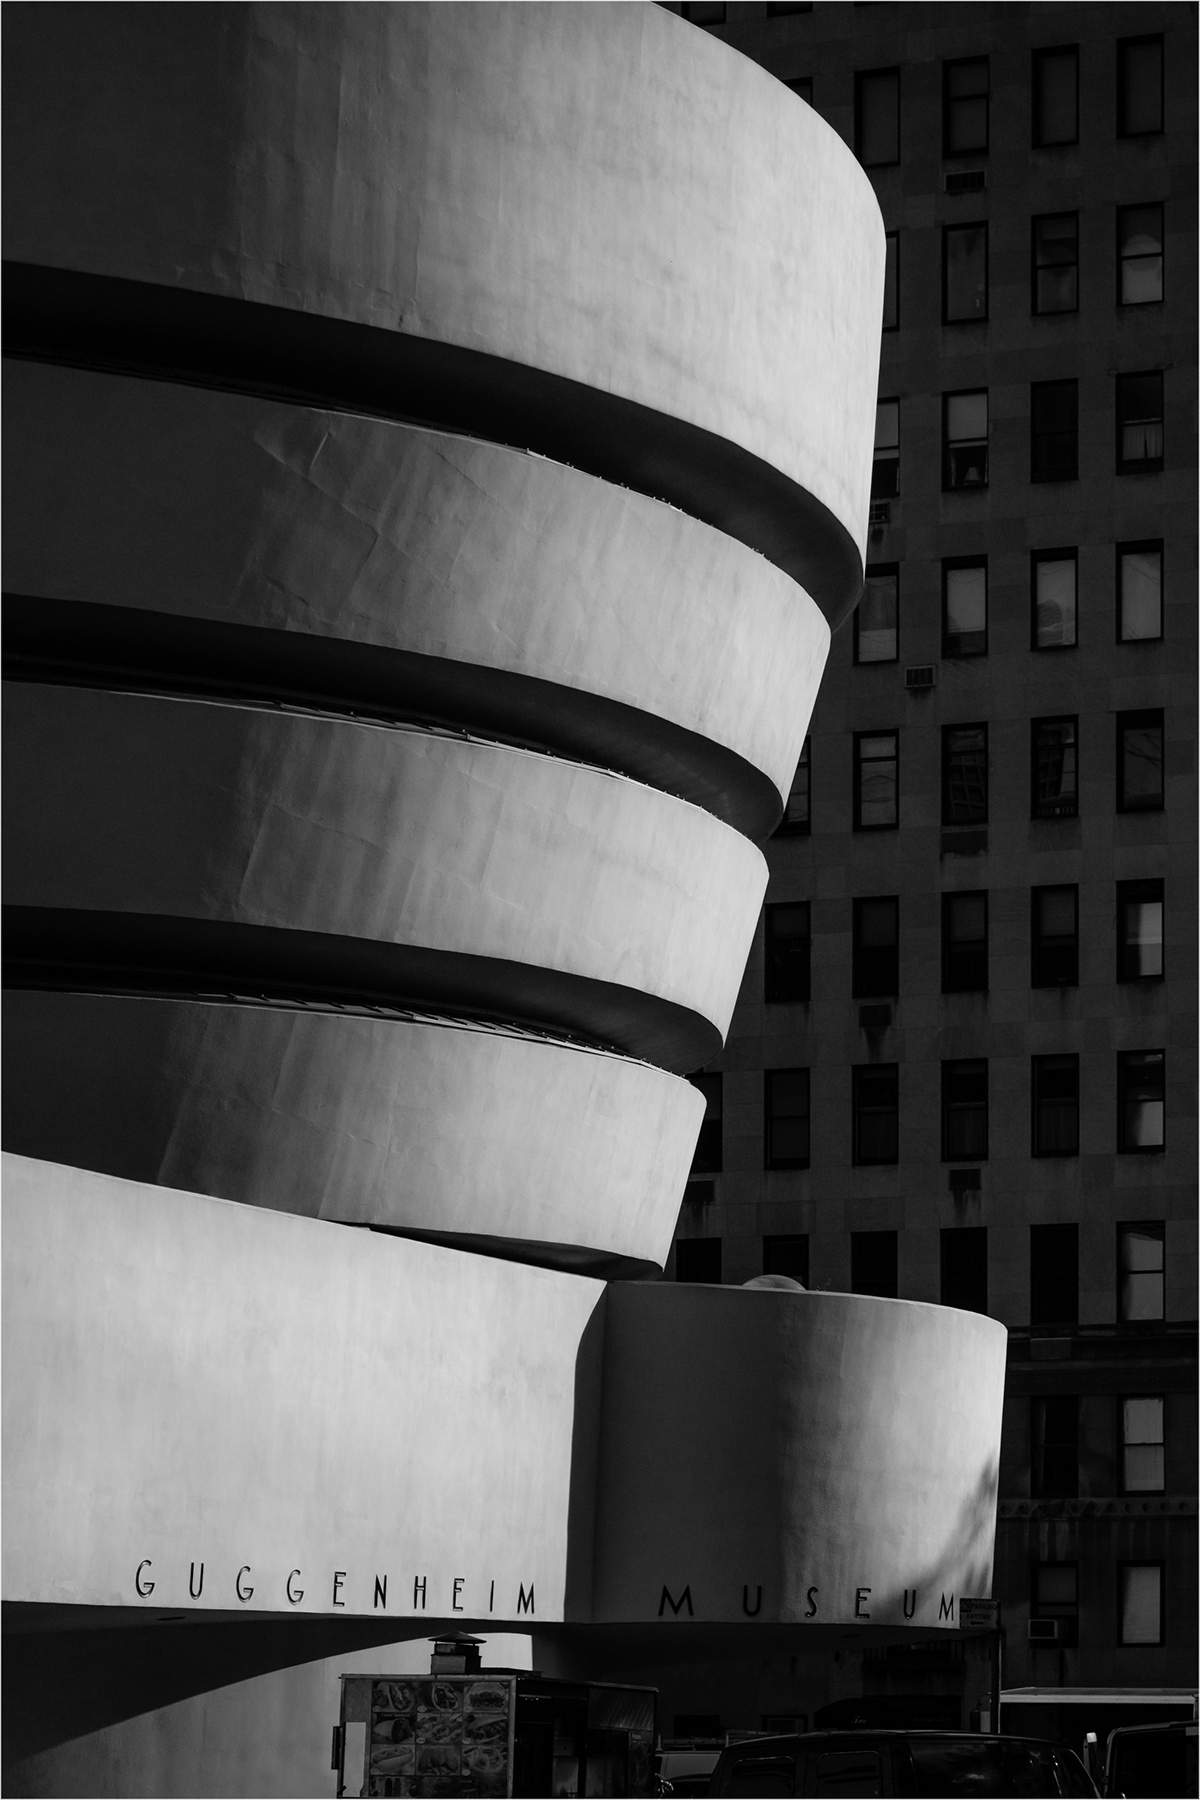 New York flatiron nyc guggenheim Frank Lloyd Wright 5. Avenue Empire Stat Building rockefeller center Seagram Building hot dog Brooklyn Bridge